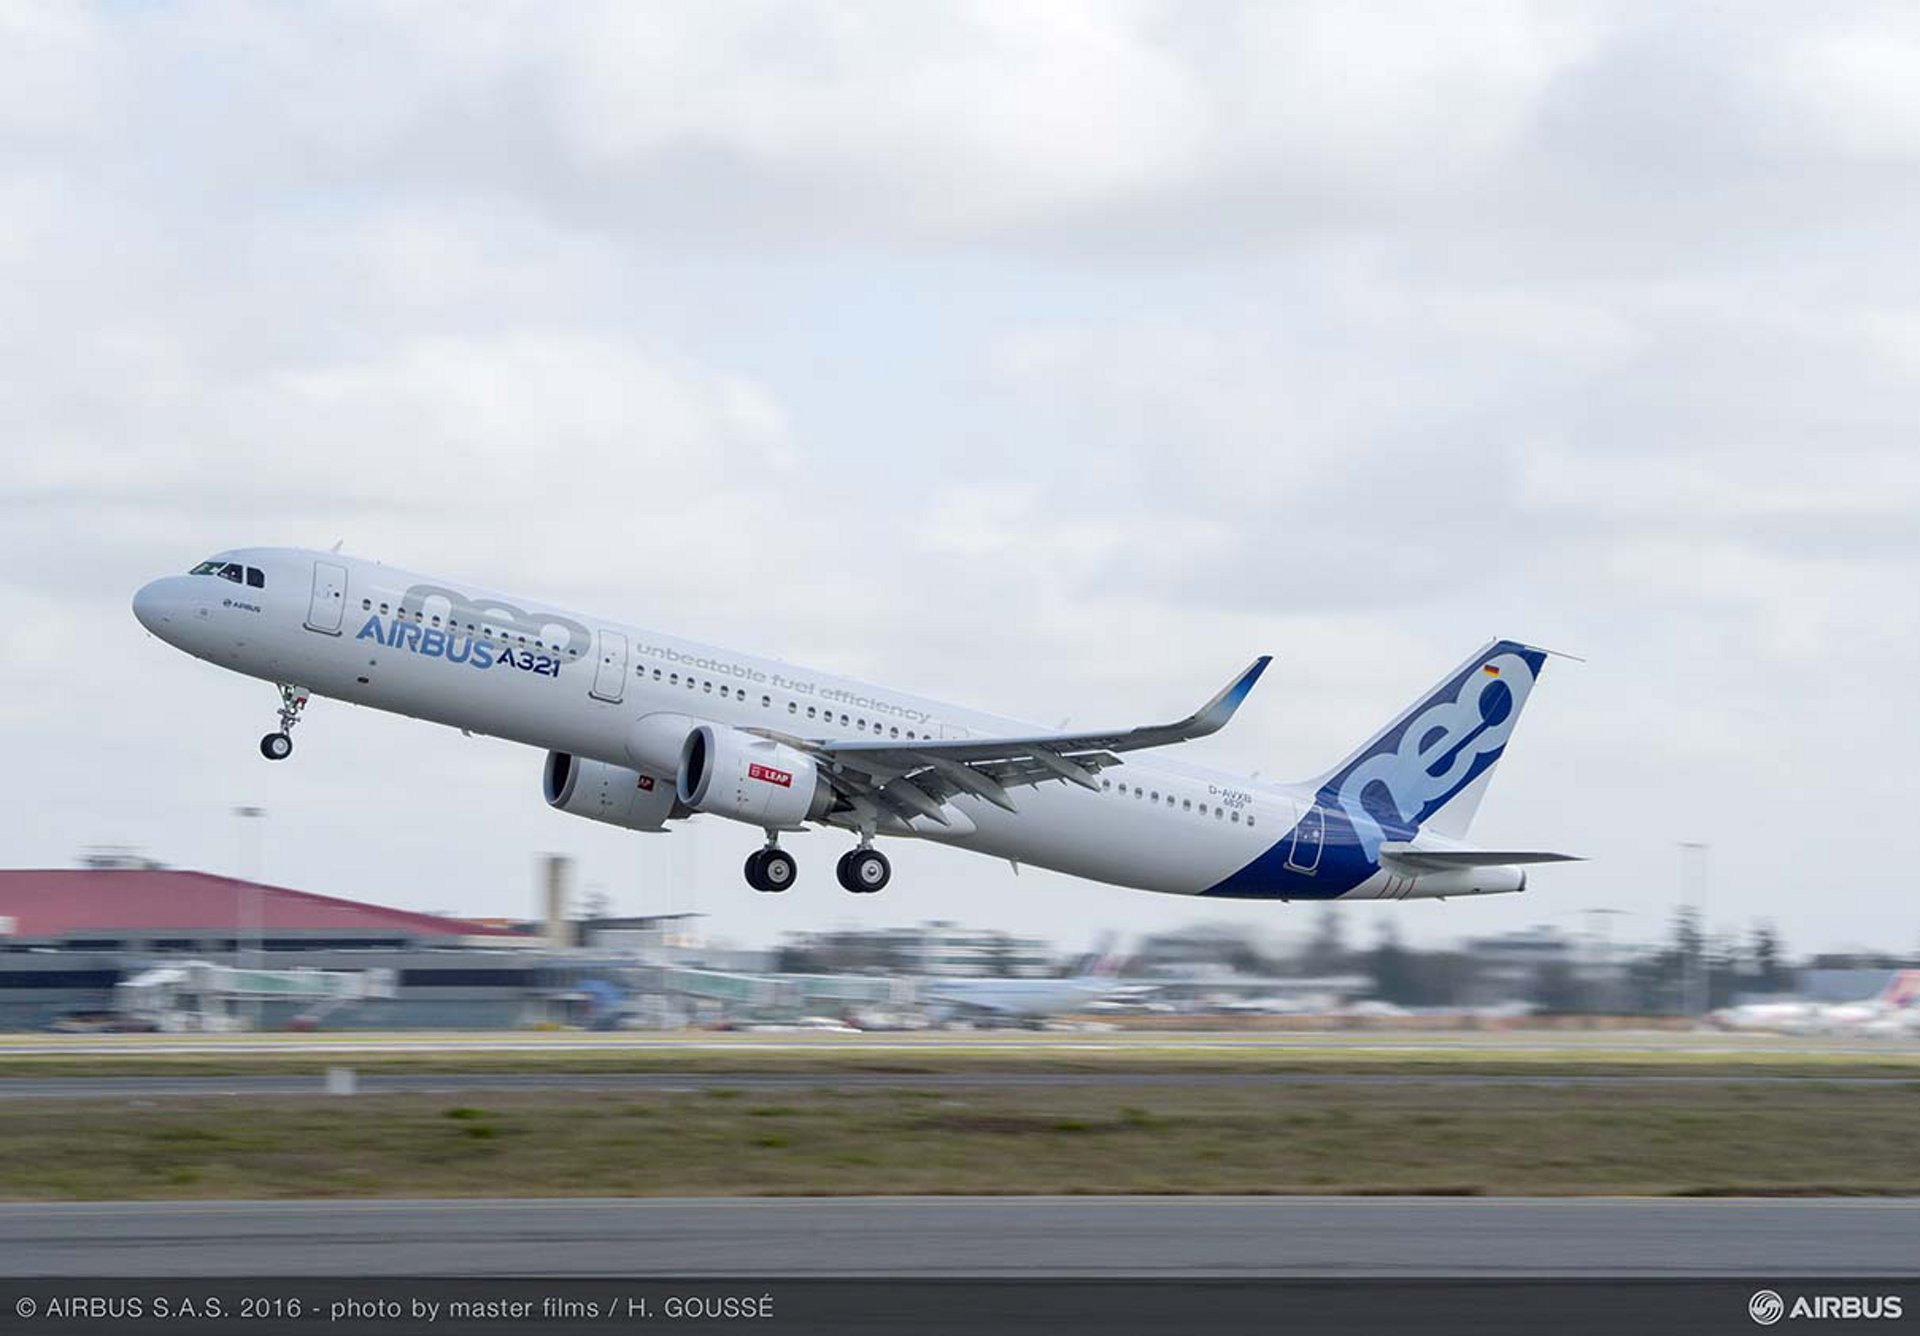 El Airbus A321neo para larga distancia recorre un récord de 7.610 kilómetros